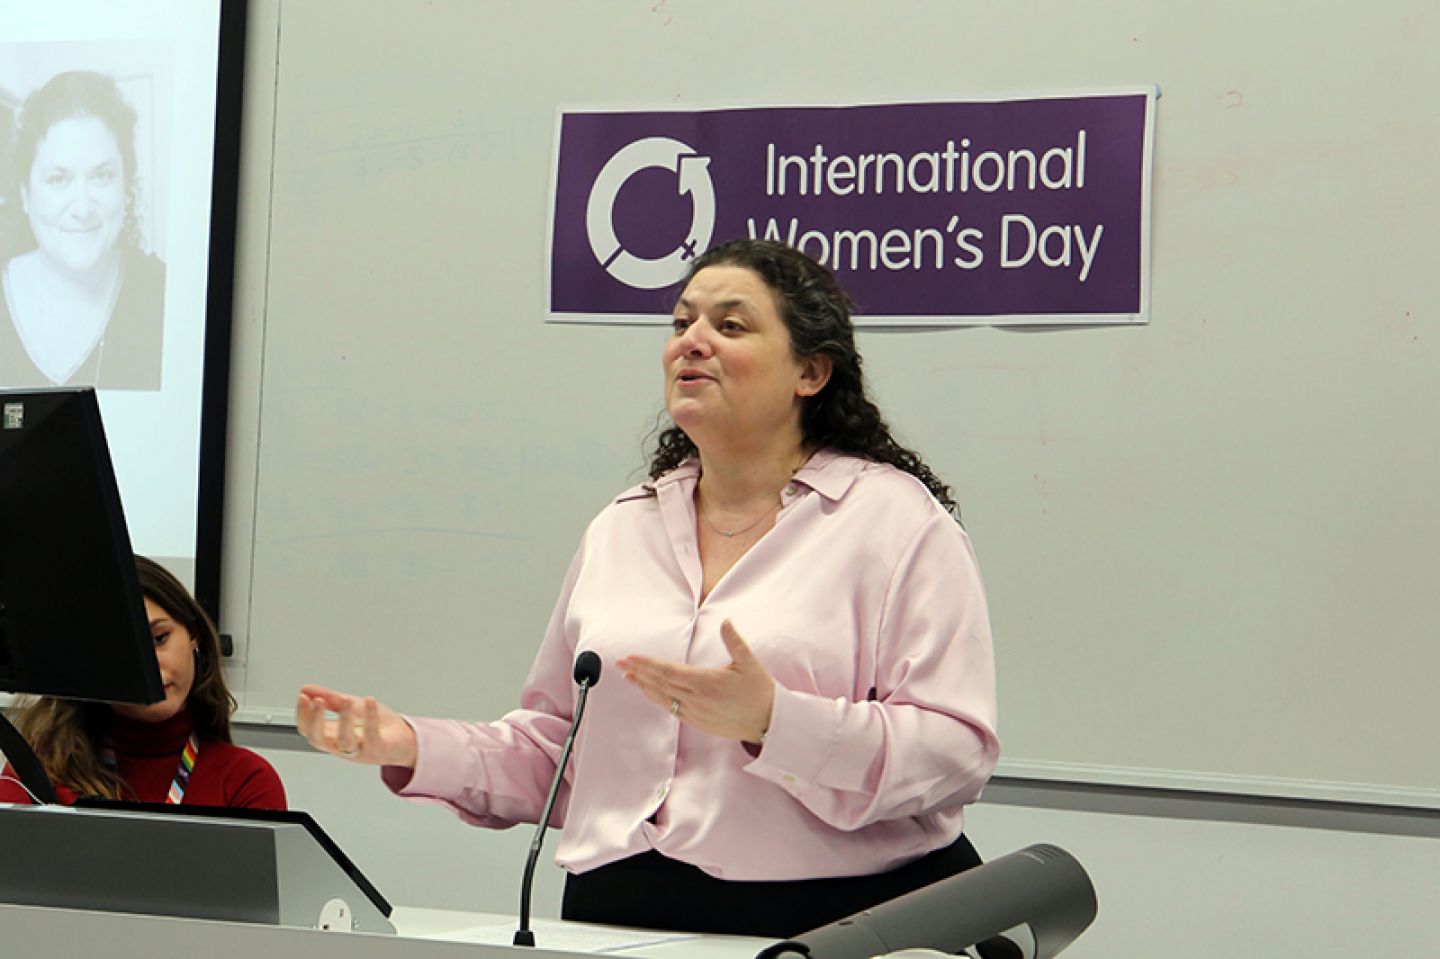 Professor Deborah Rafalin speaking remotely at the School of Health